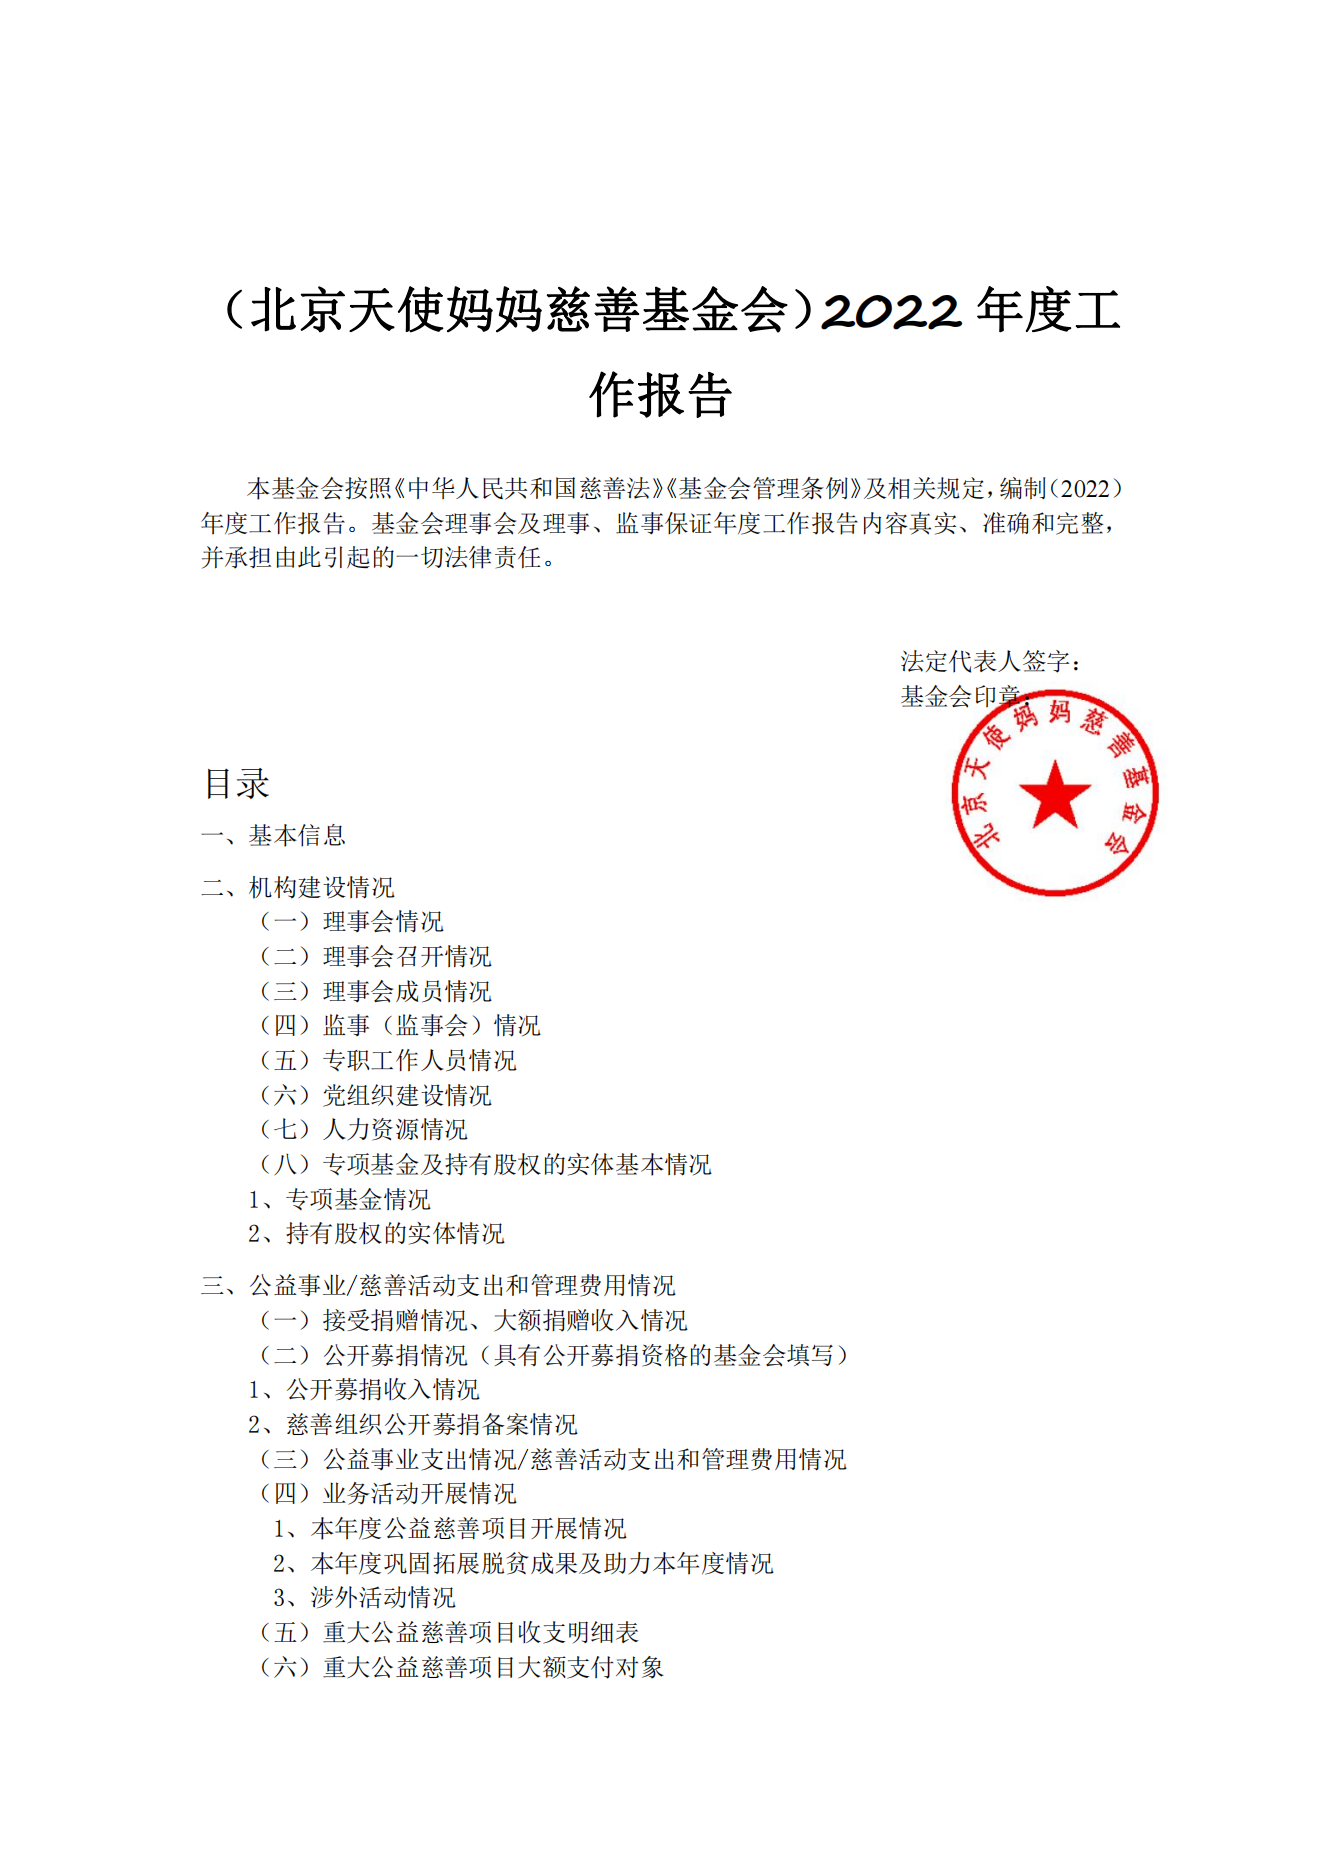 3、2022年度年检报告(终)_00(1).png